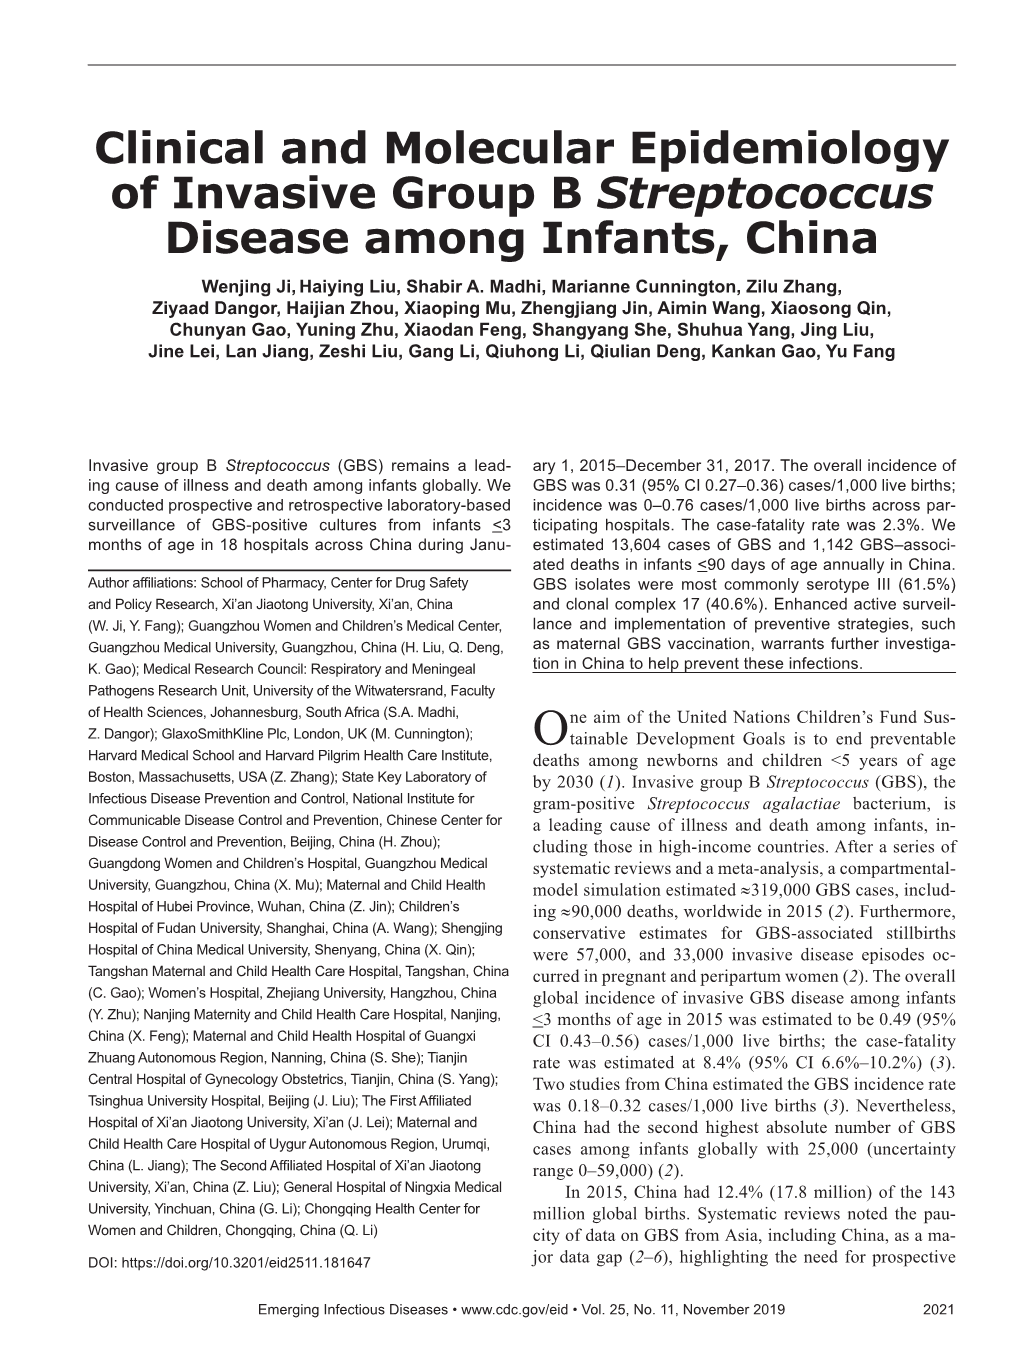 Clinical and Molecular Epidemiology of Invasive Group B Streptococcus Disease Among Infants, China Wenjing Ji, Haiying Liu, Shabir A